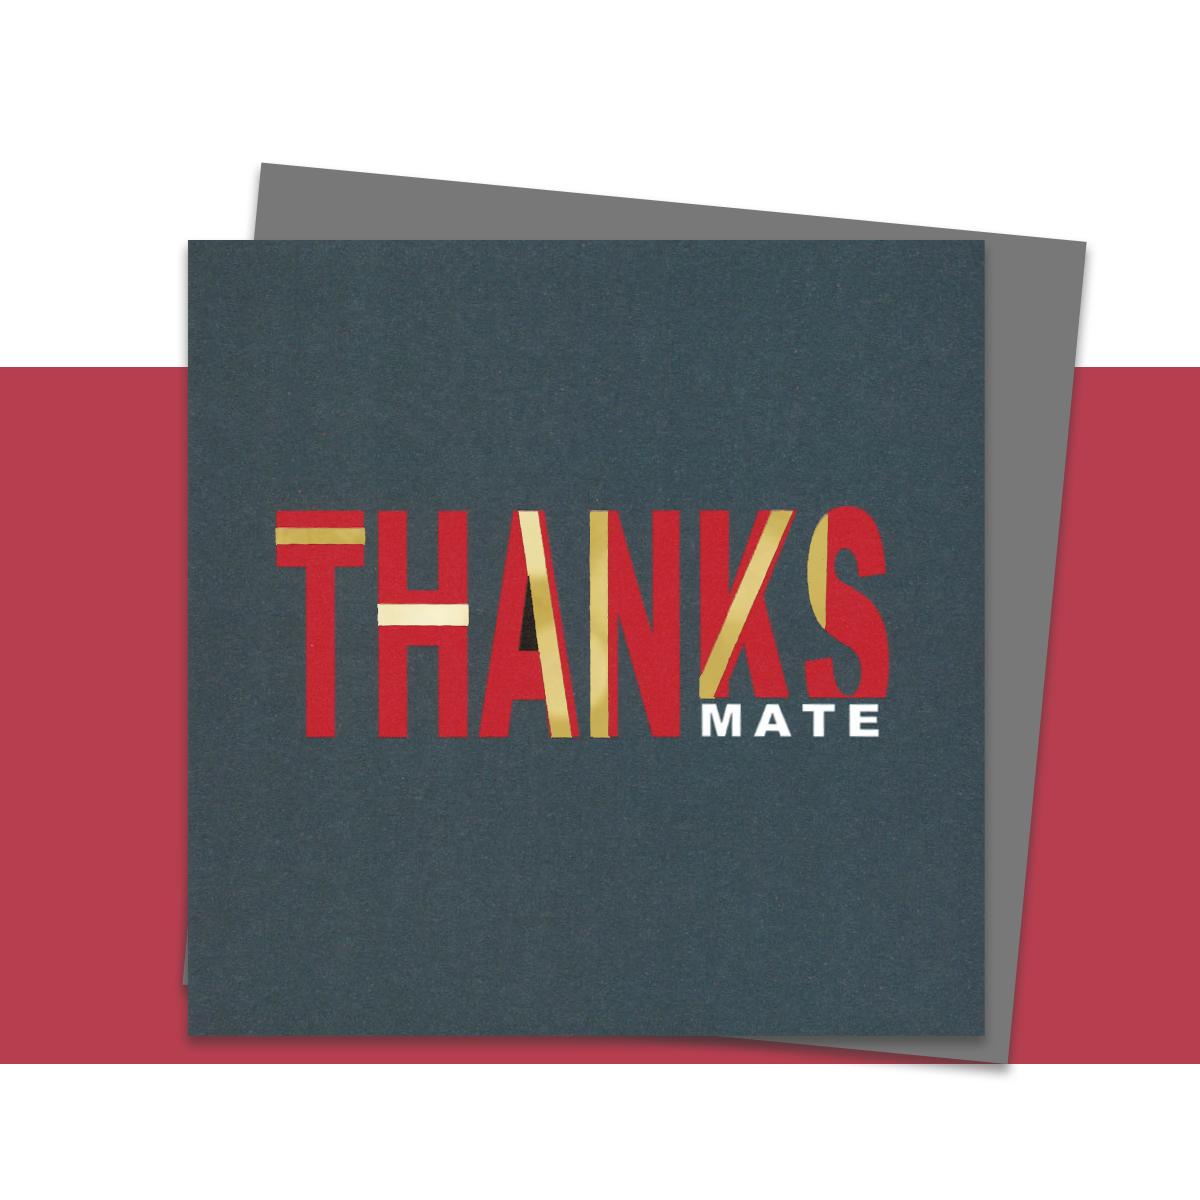 Thanks Mate Greeting Card Alongside Its Dark Grey Envelope